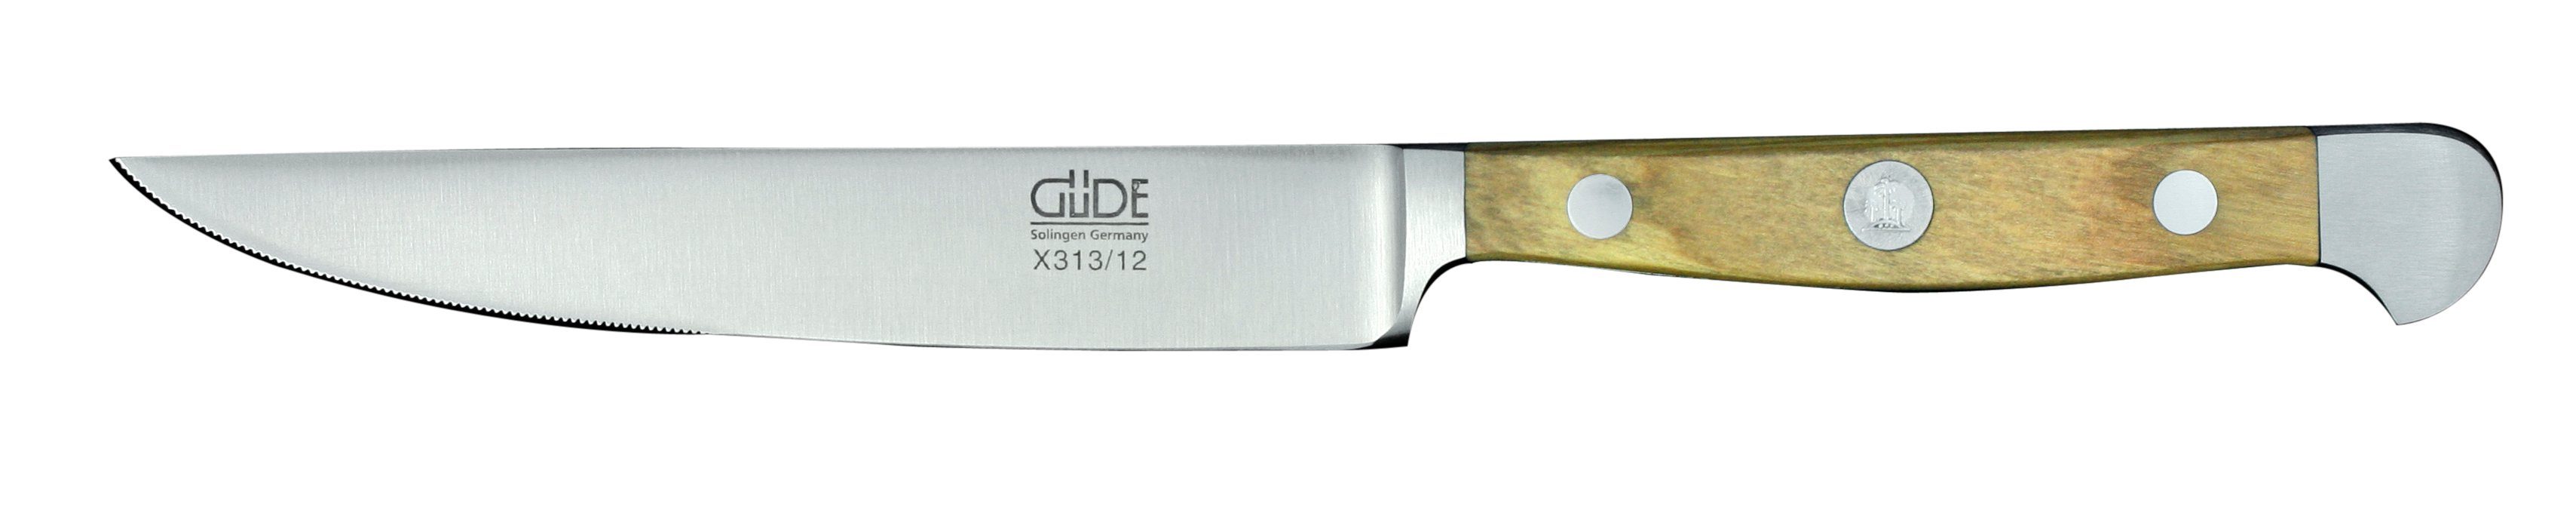 Messer Olive Solingen Olivenholz Güde cm - Steakmesser 12 CVM-Messerstahl - Griffschalen Alpha Steakmesser